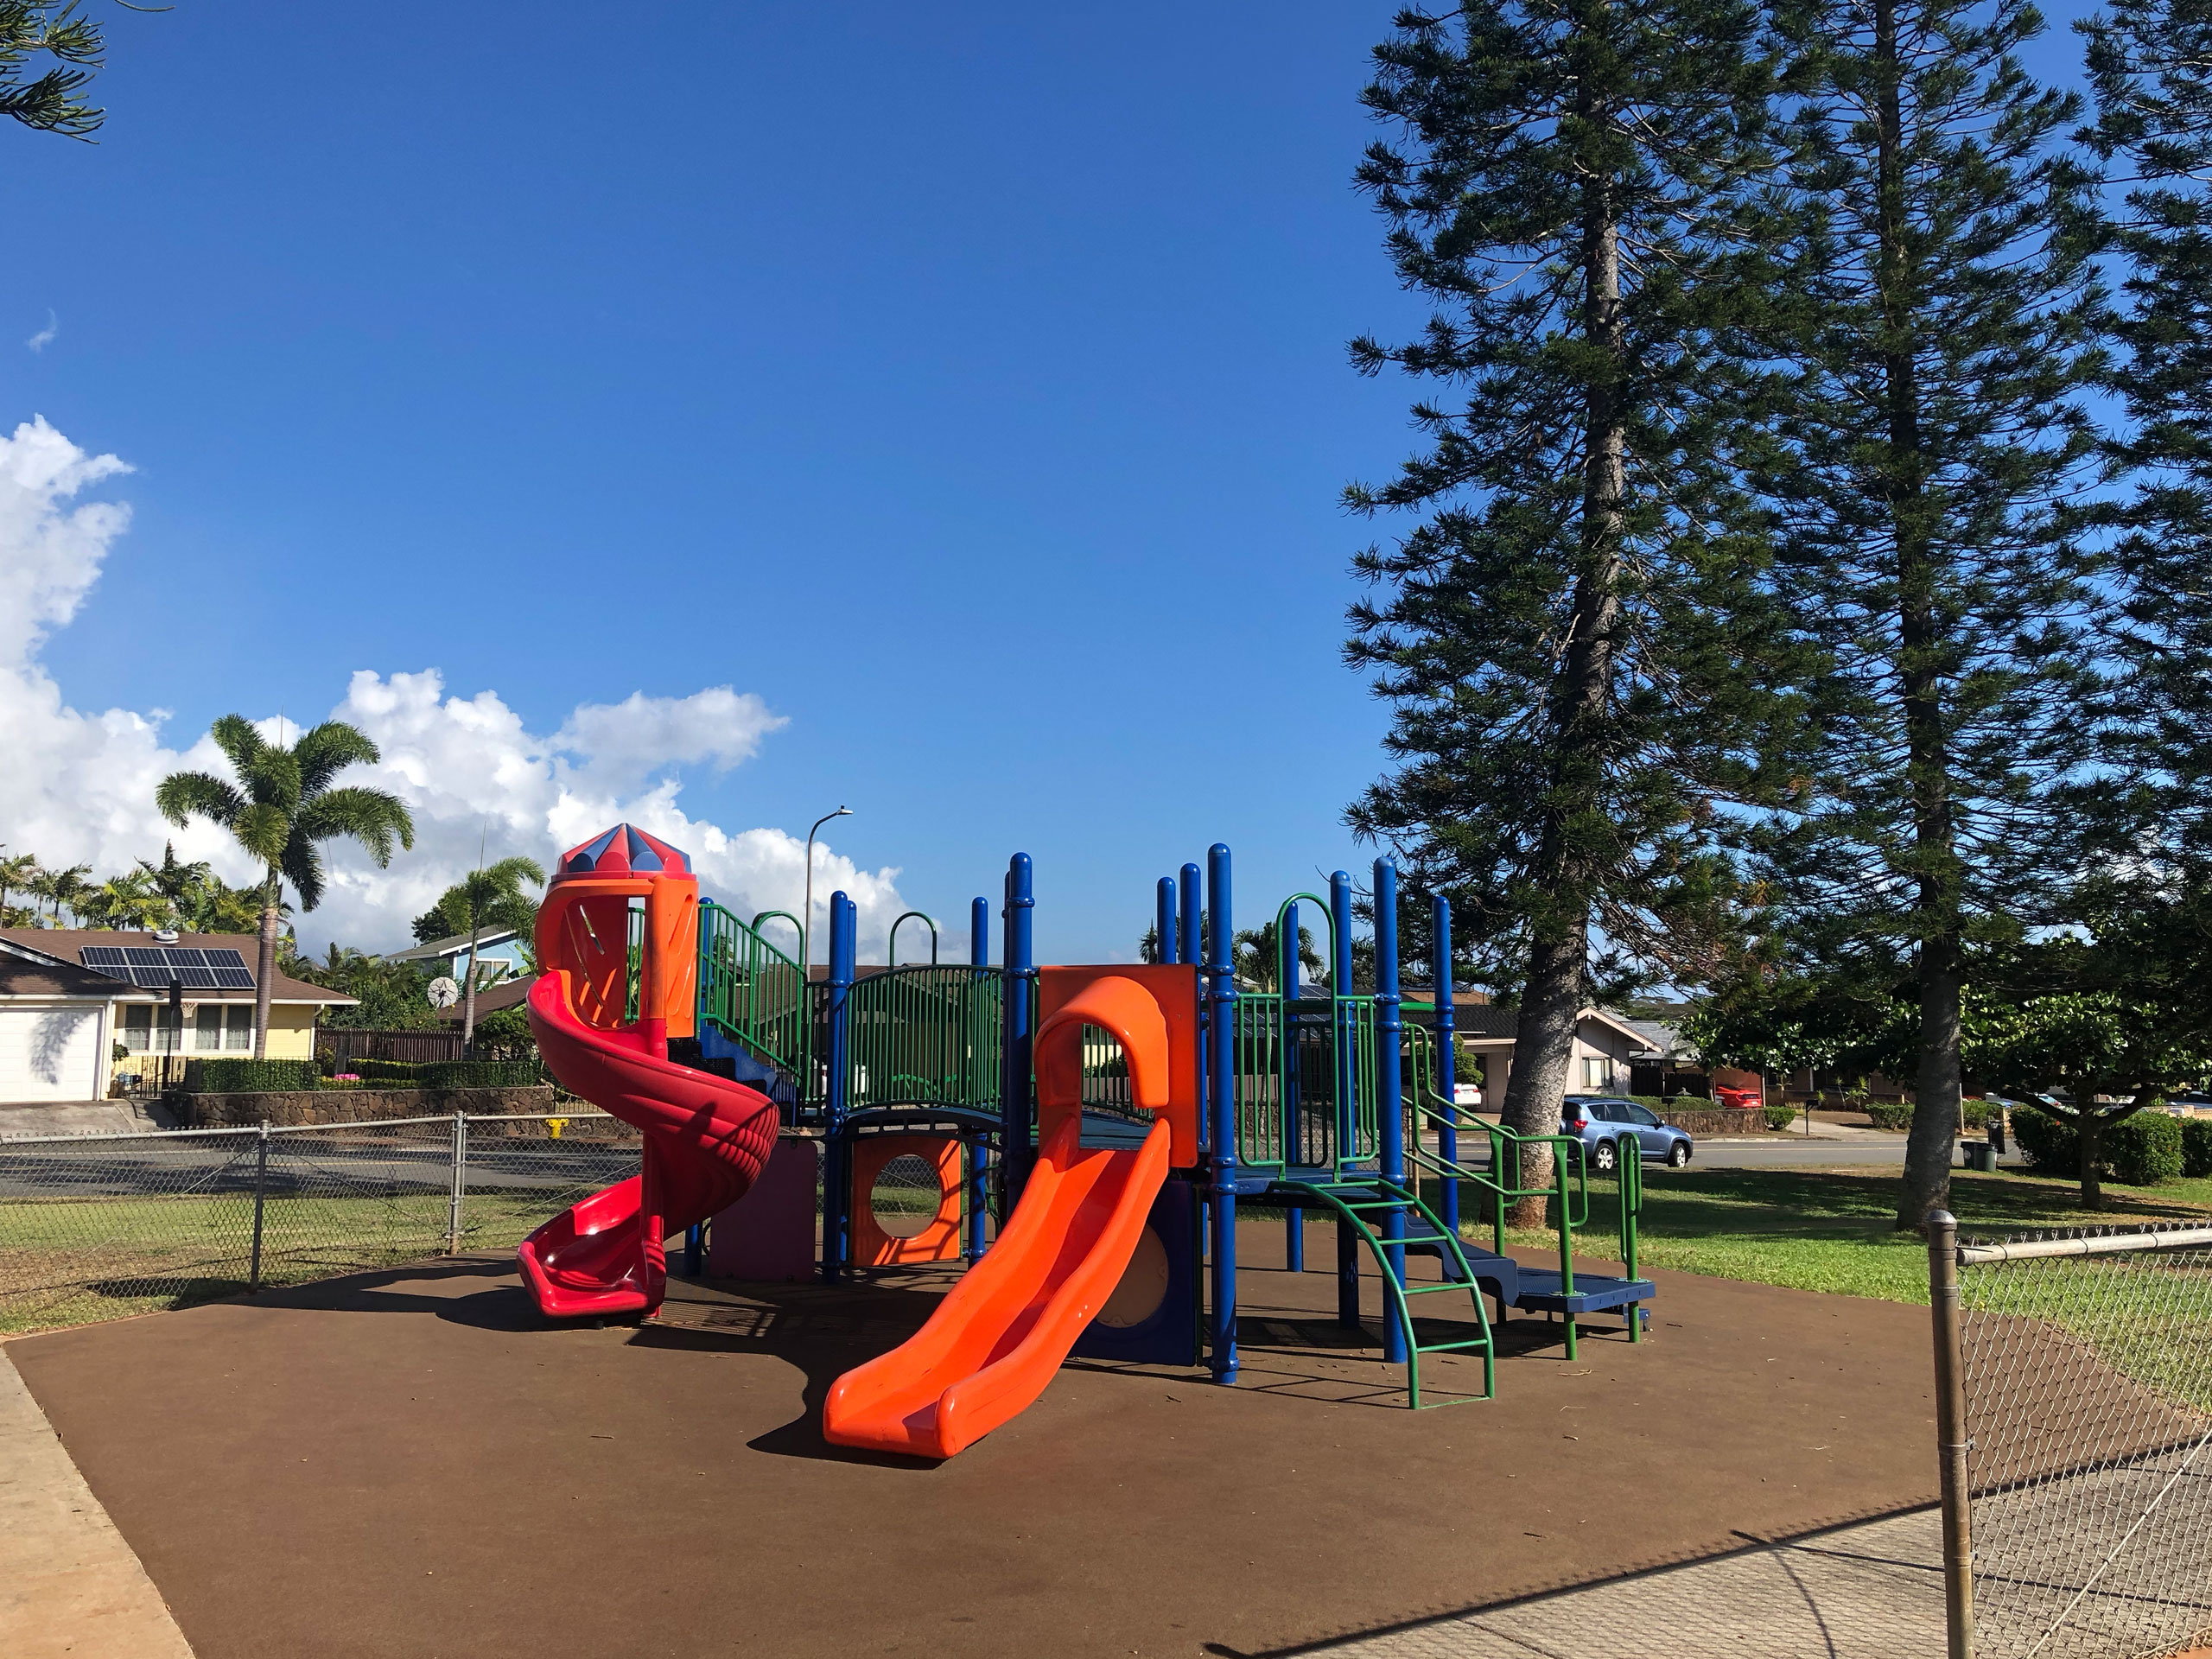 Playground at 16 Acre Park, Mililani, HI